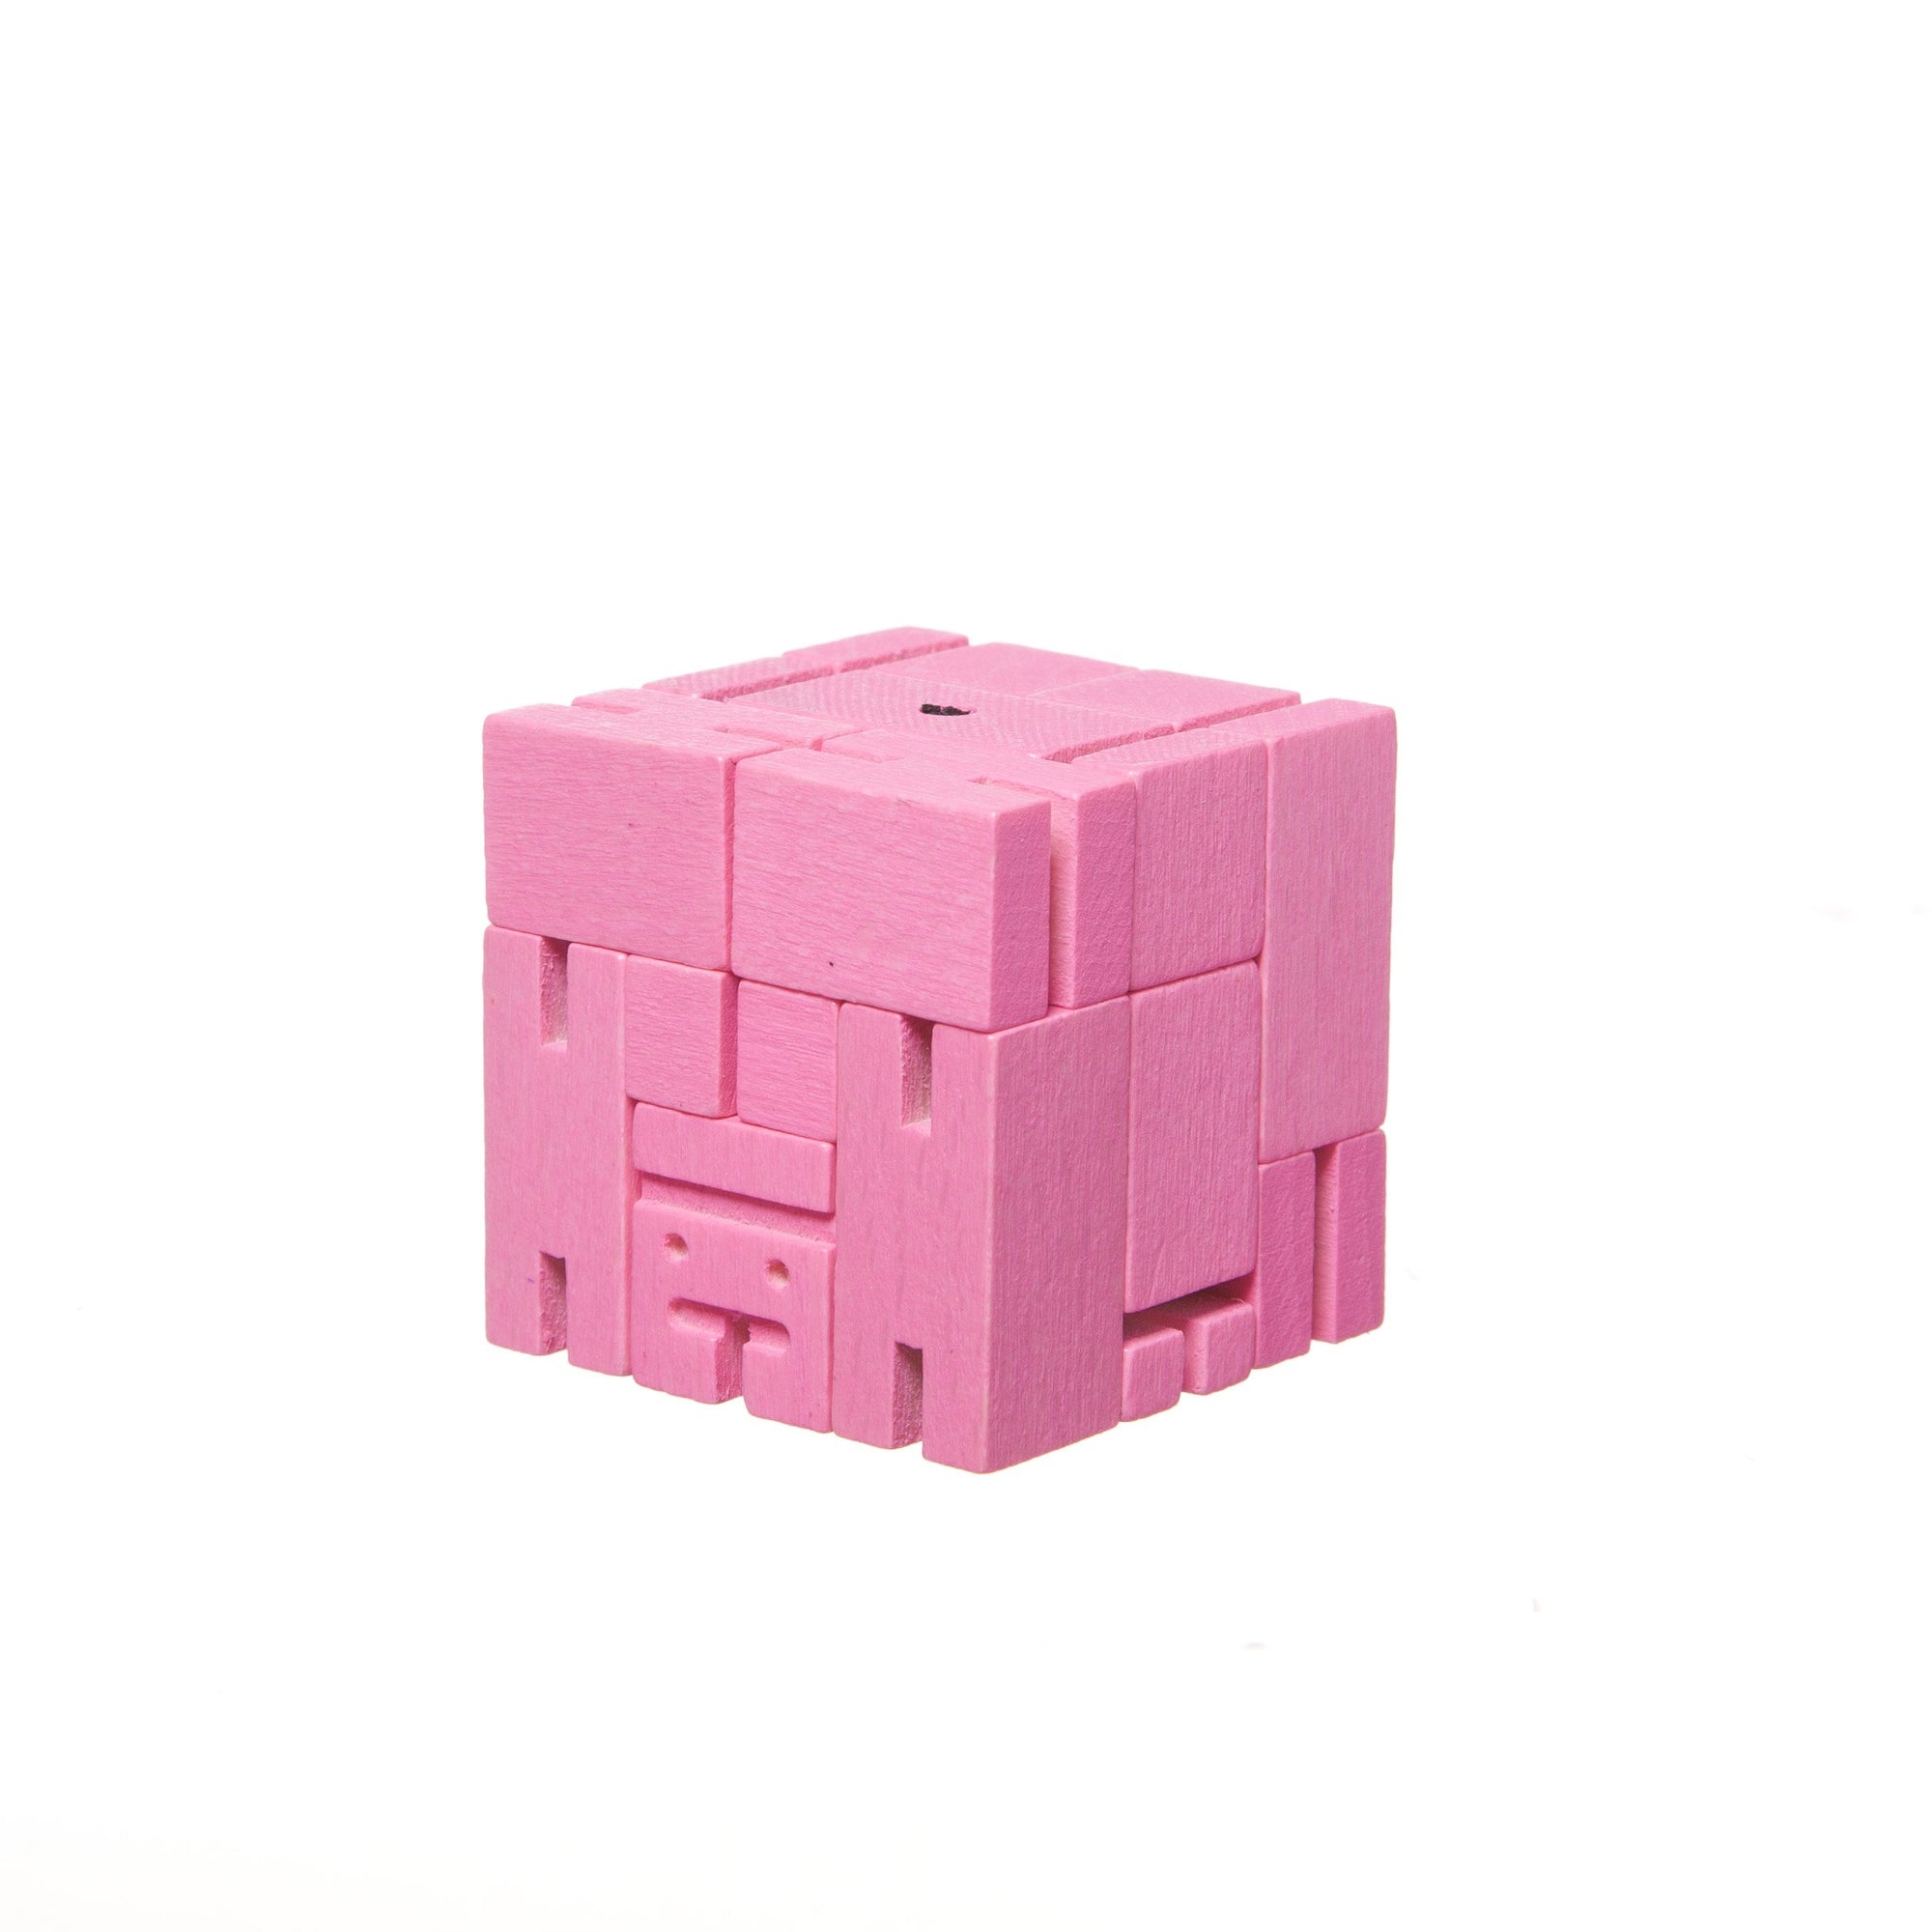 Cubebot Micro, Pink